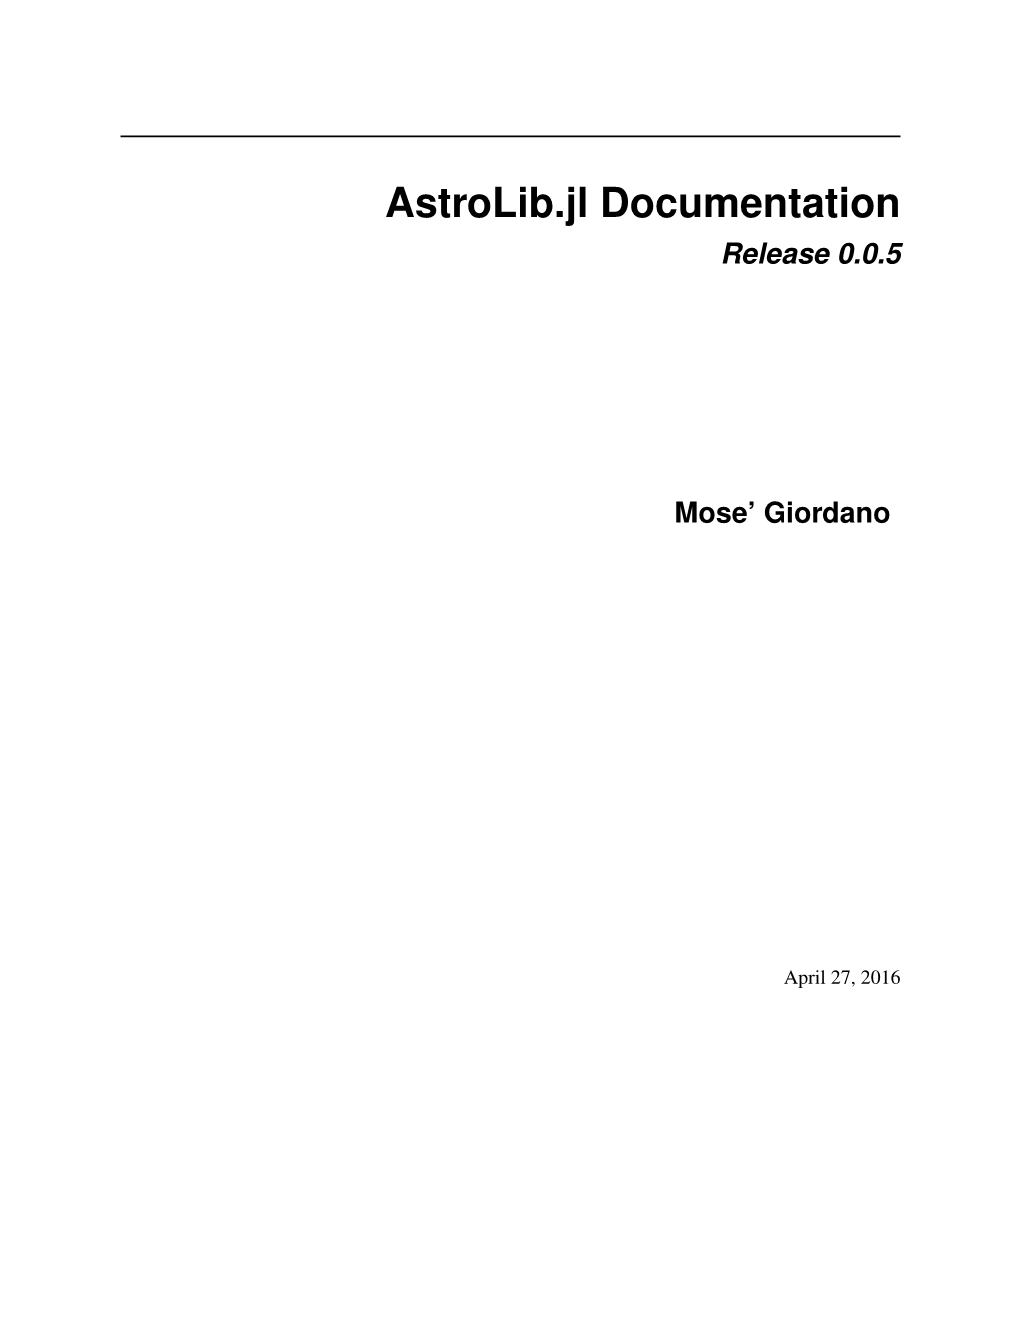 Astrolib.Jl Documentation Release 0.0.5